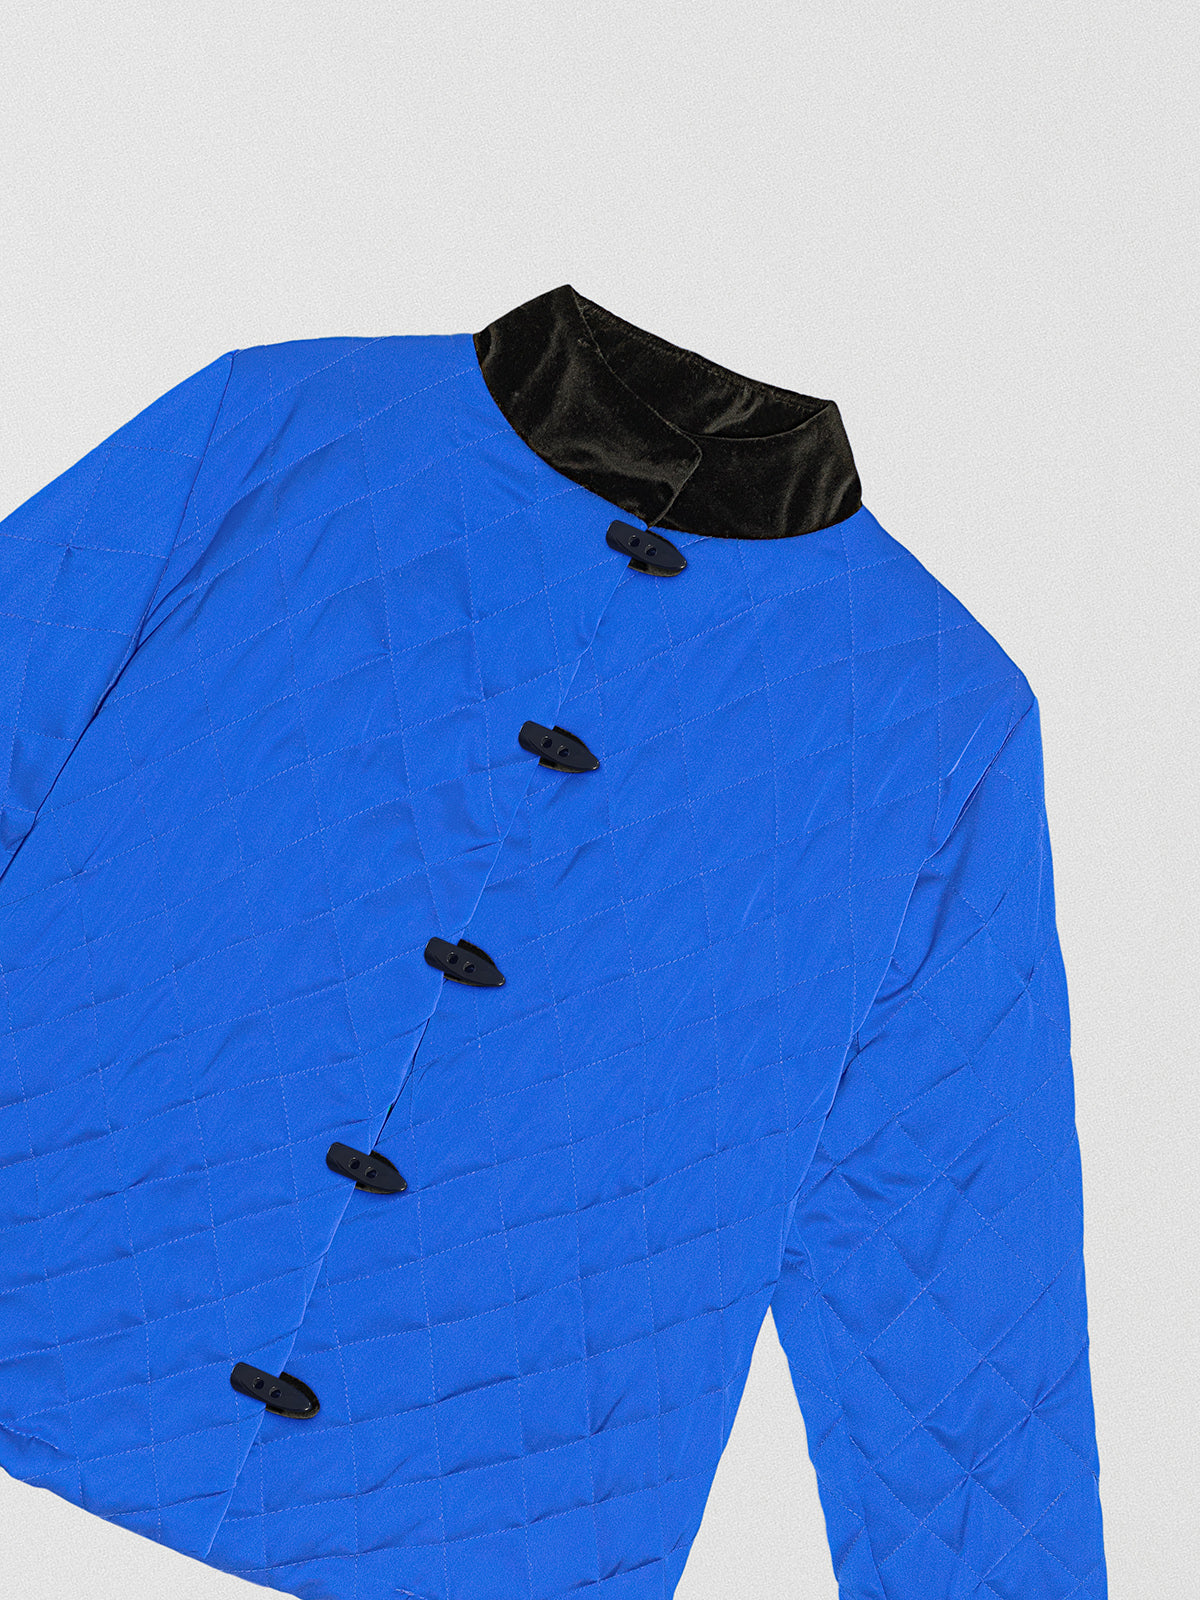 Blue padded jacket with black velvet details